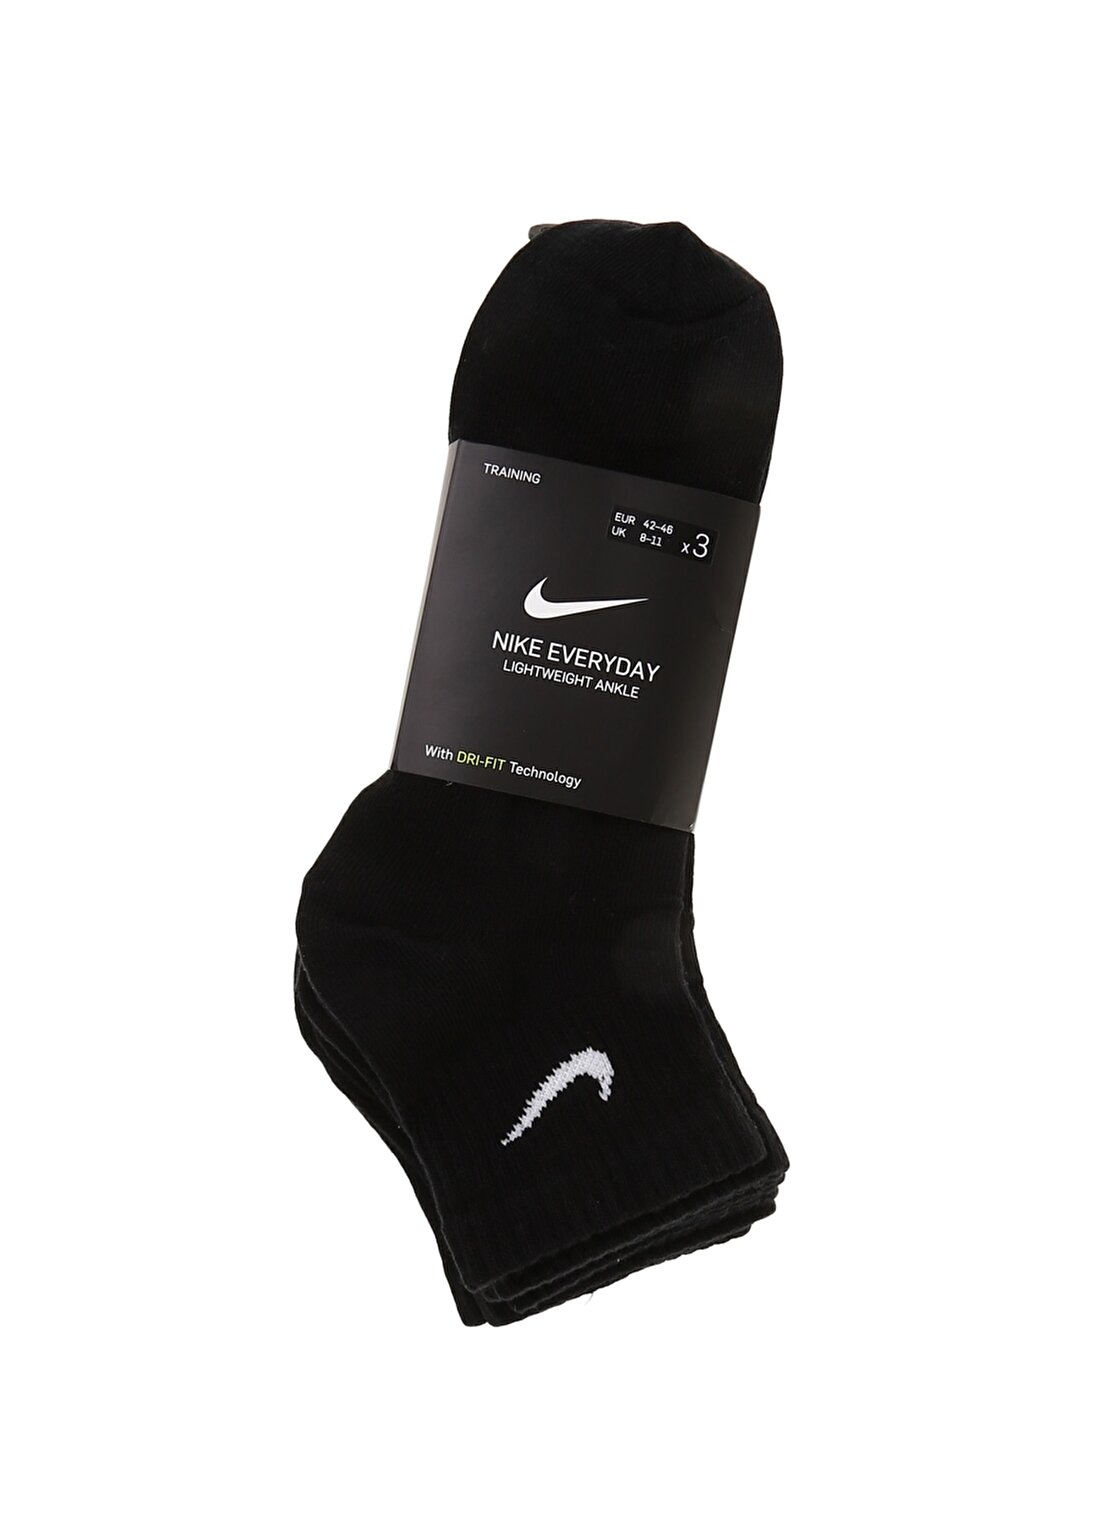 Nike Everyday Lightweight Antrenman Bilek (3 Çift) Spor Çorap